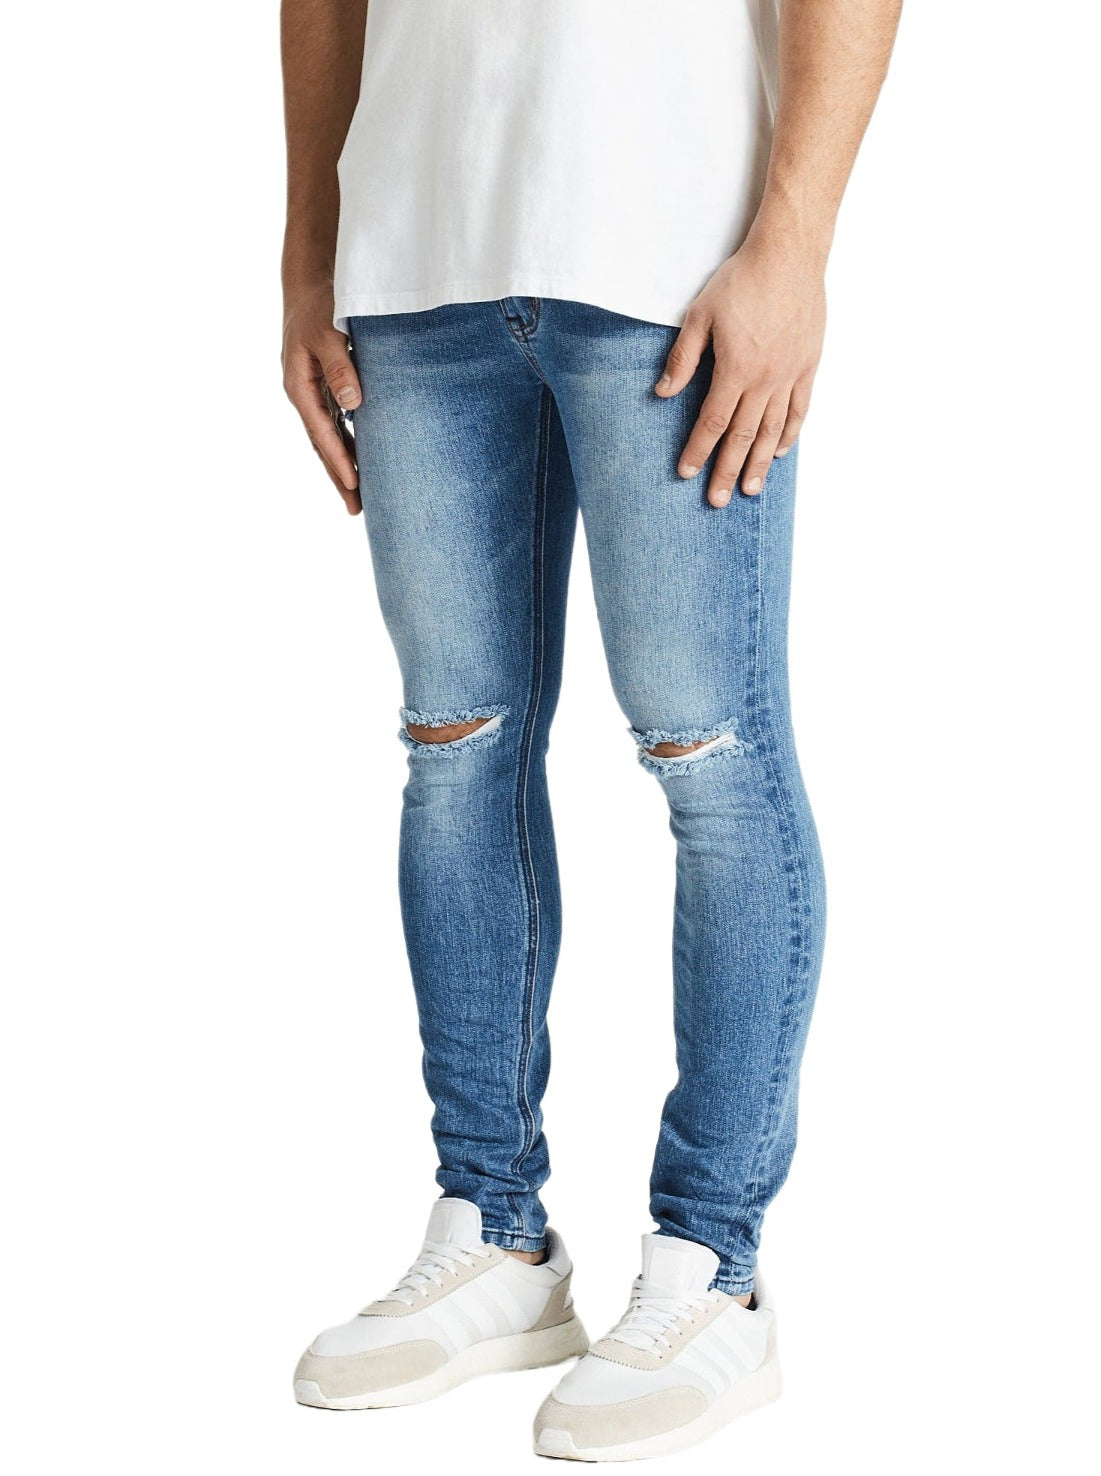 Nena And Pasadena NXP Super Blue – - Skinny Tyler 88 Jean Jeans - Arizona Fit